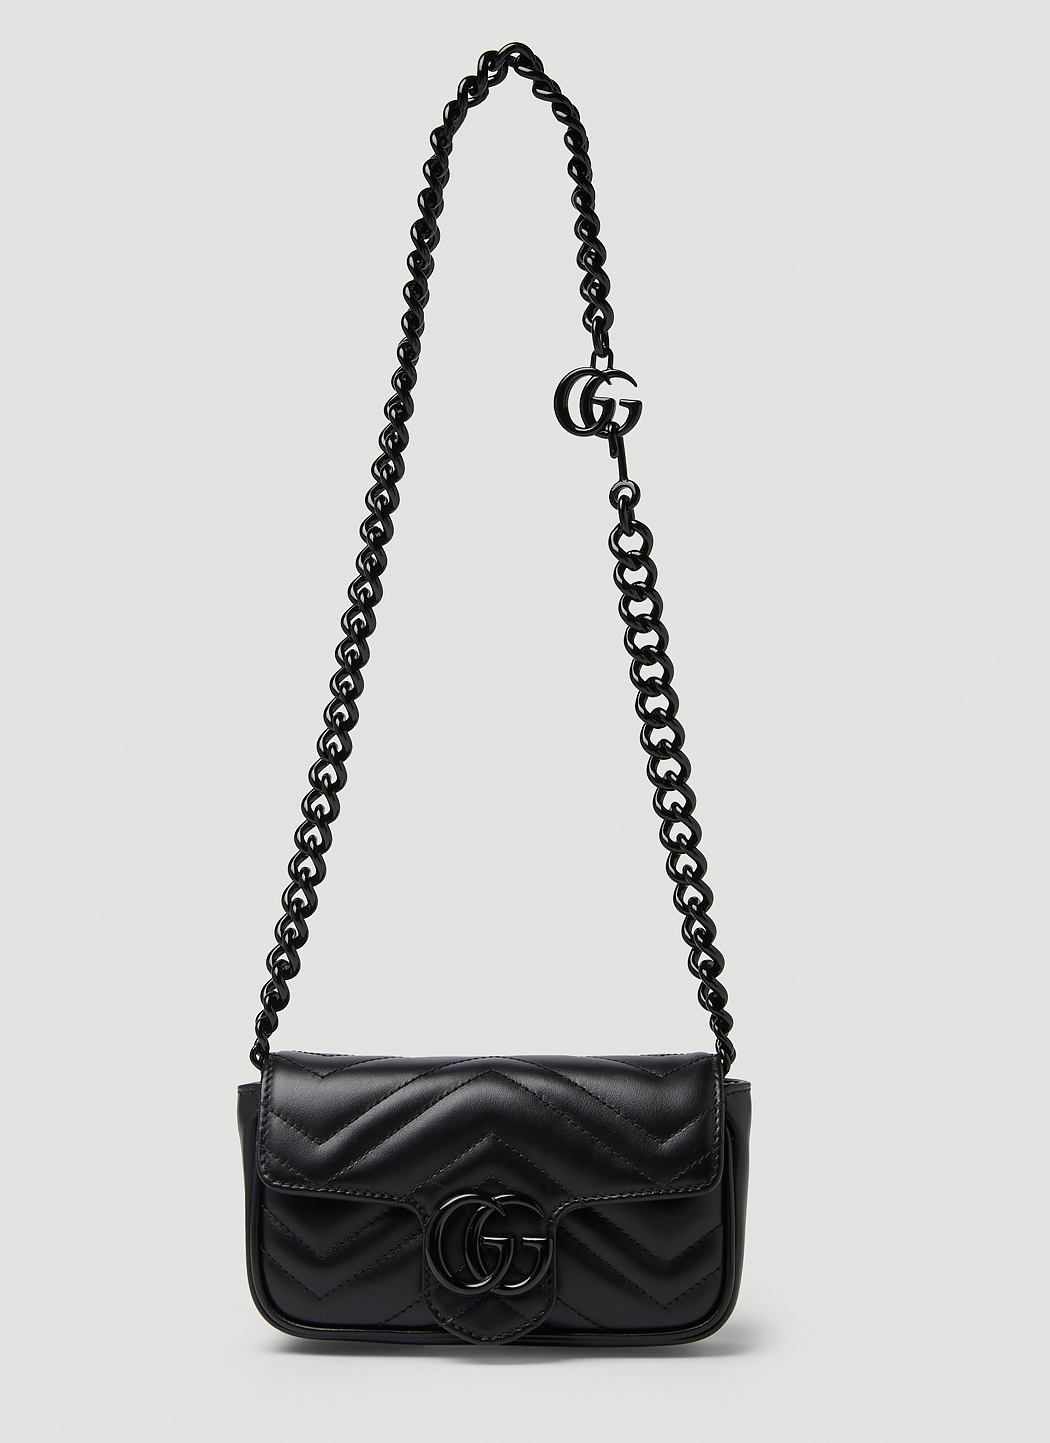 Marmont Gucci Handbags for Women - Vestiaire Collective